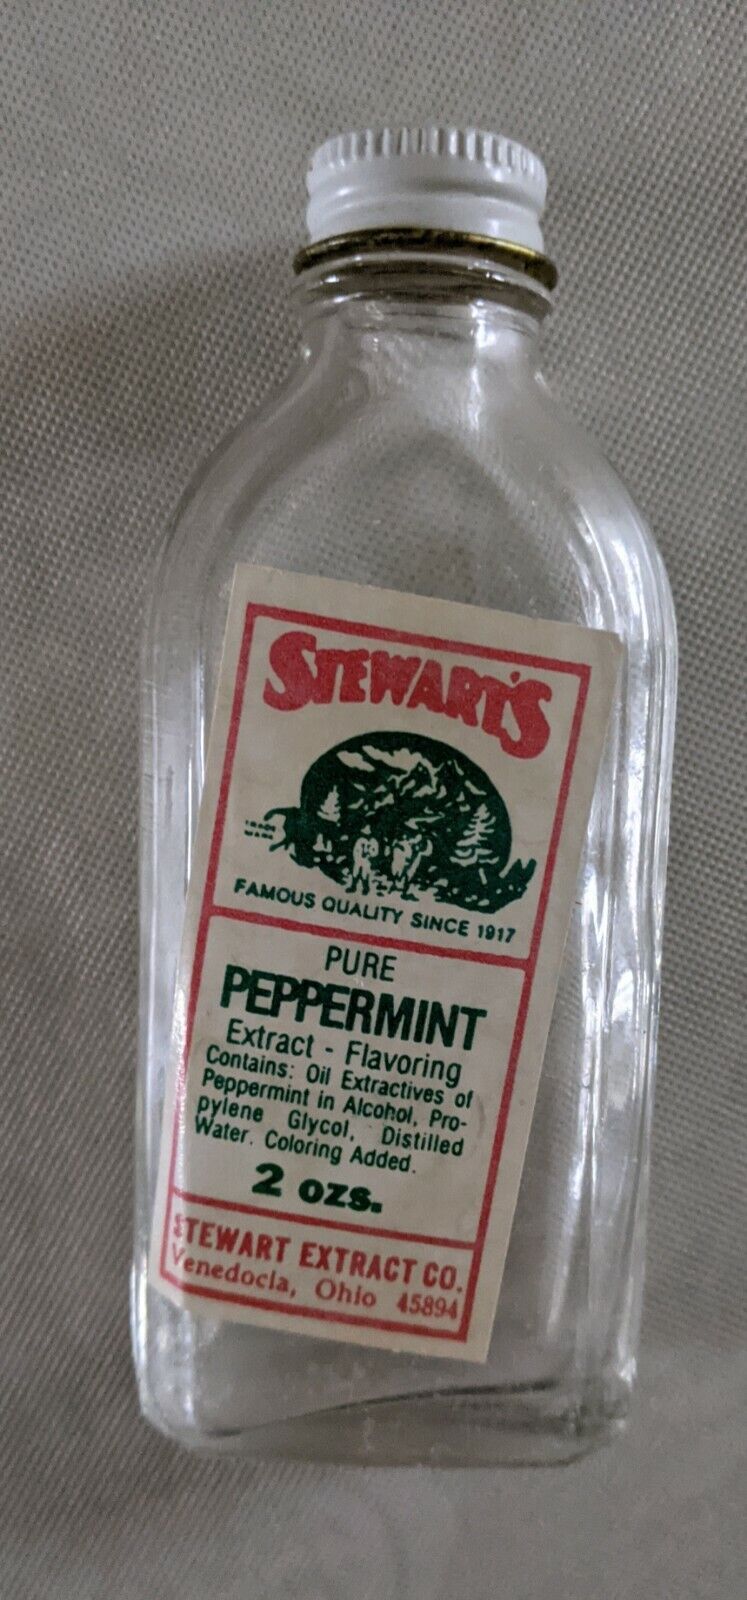 Vintage Stewart\'s Peppermint Bottle, Stewart Extract Company, Venedocia Ohio